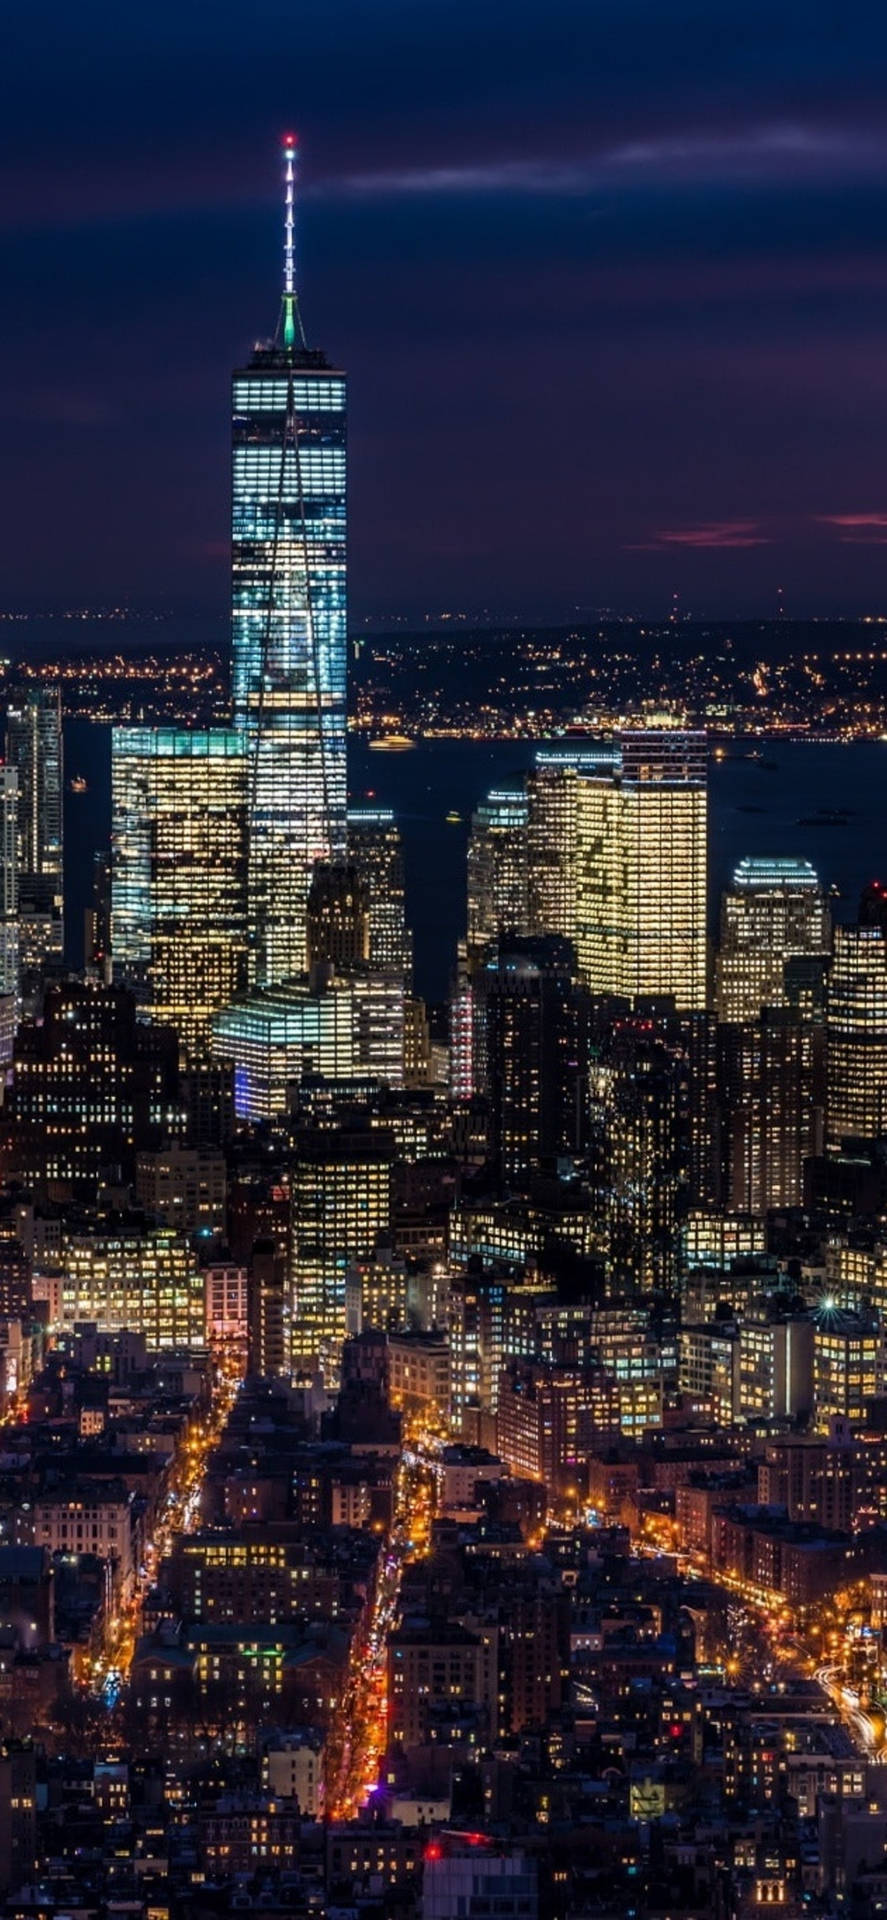 New York City Iphone X Night View Background